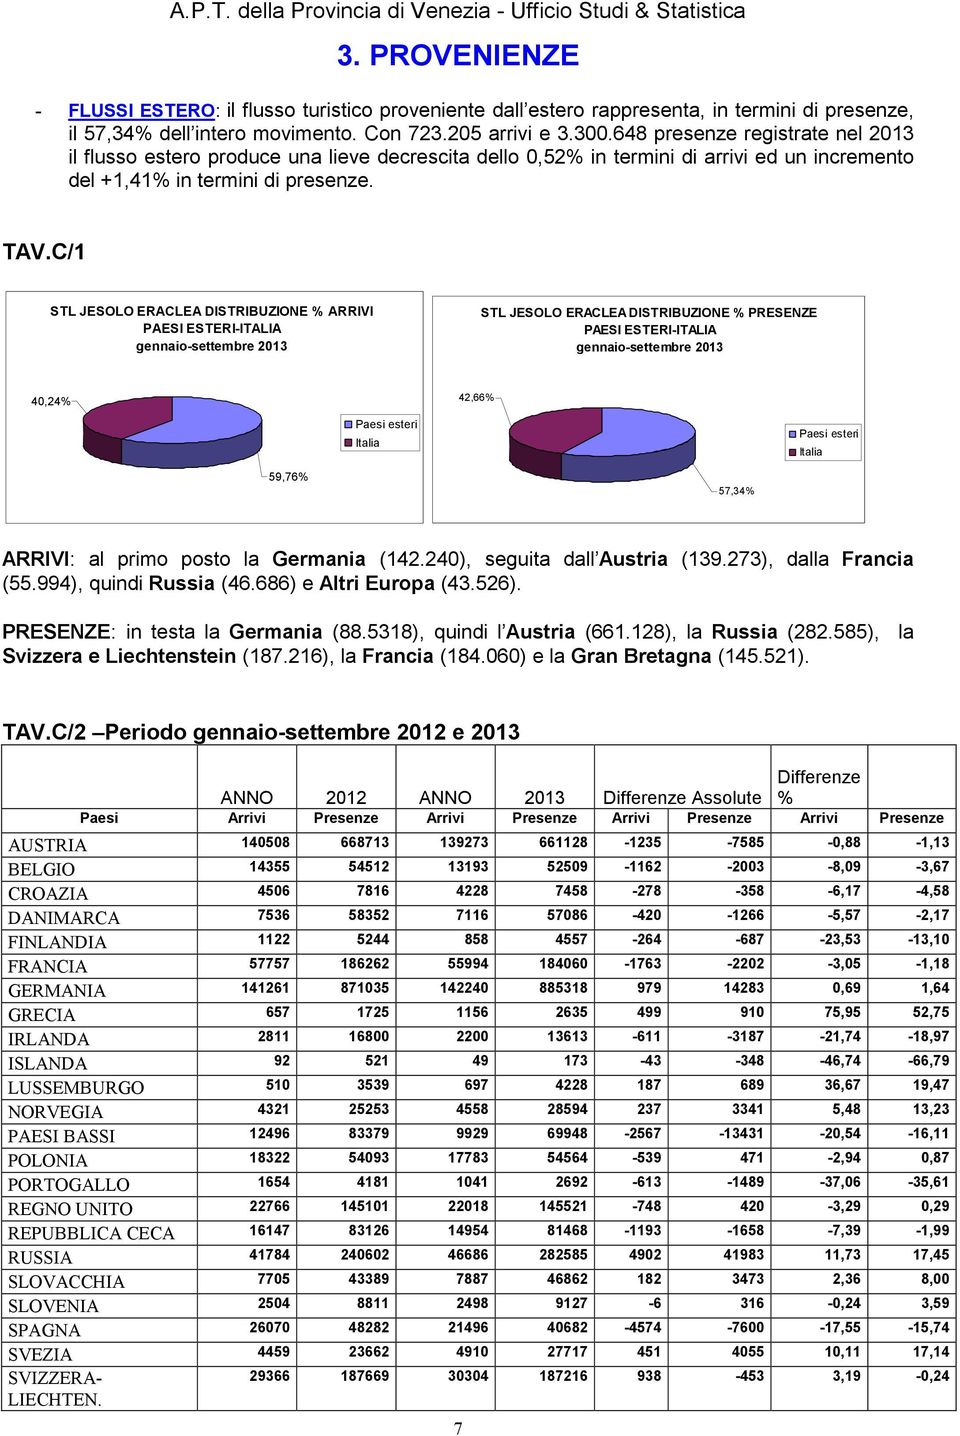 C/1 DISTRIBUZIONE % ARRIVI PAESI ESTERI-ITALIA DISTRIBUZIONE % PRESENZE PAESI ESTERI-ITALIA 40,24% Paesi esteri Italia 59,76% 42,66% Paesi esteri Italia 57,34% ARRIVI: al primo posto la Germania (142.